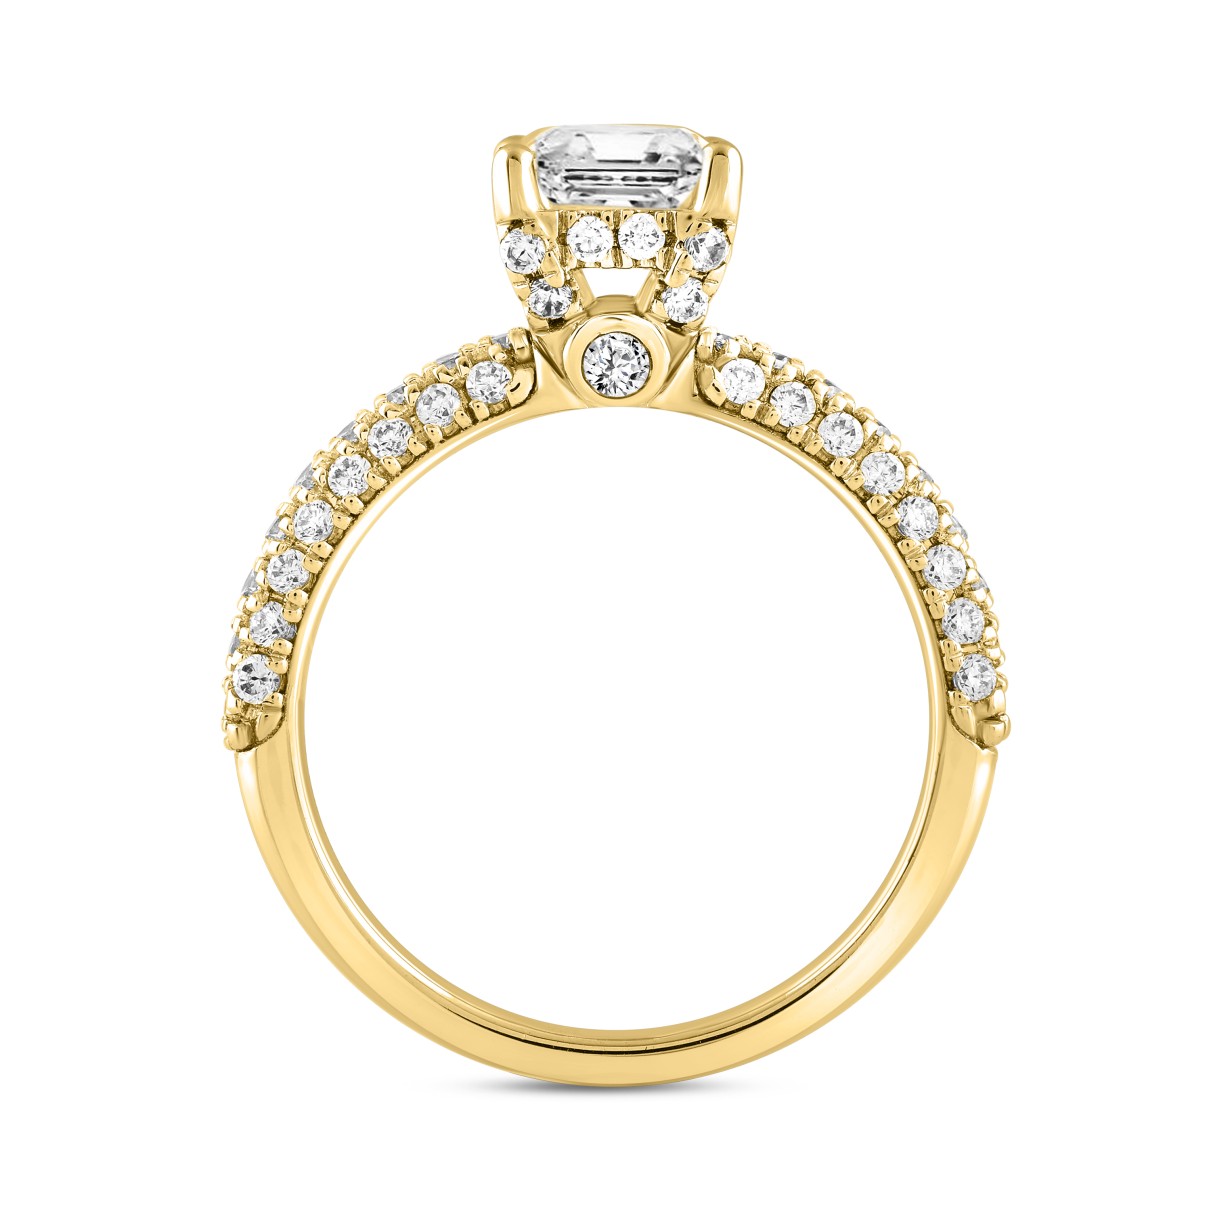 LADIES RING 2 3/4CT ROUND/EMERALD DIAMOND 14K YELLOW GOLD (CENTER STONE EMERALD DIAMOND 2CT )